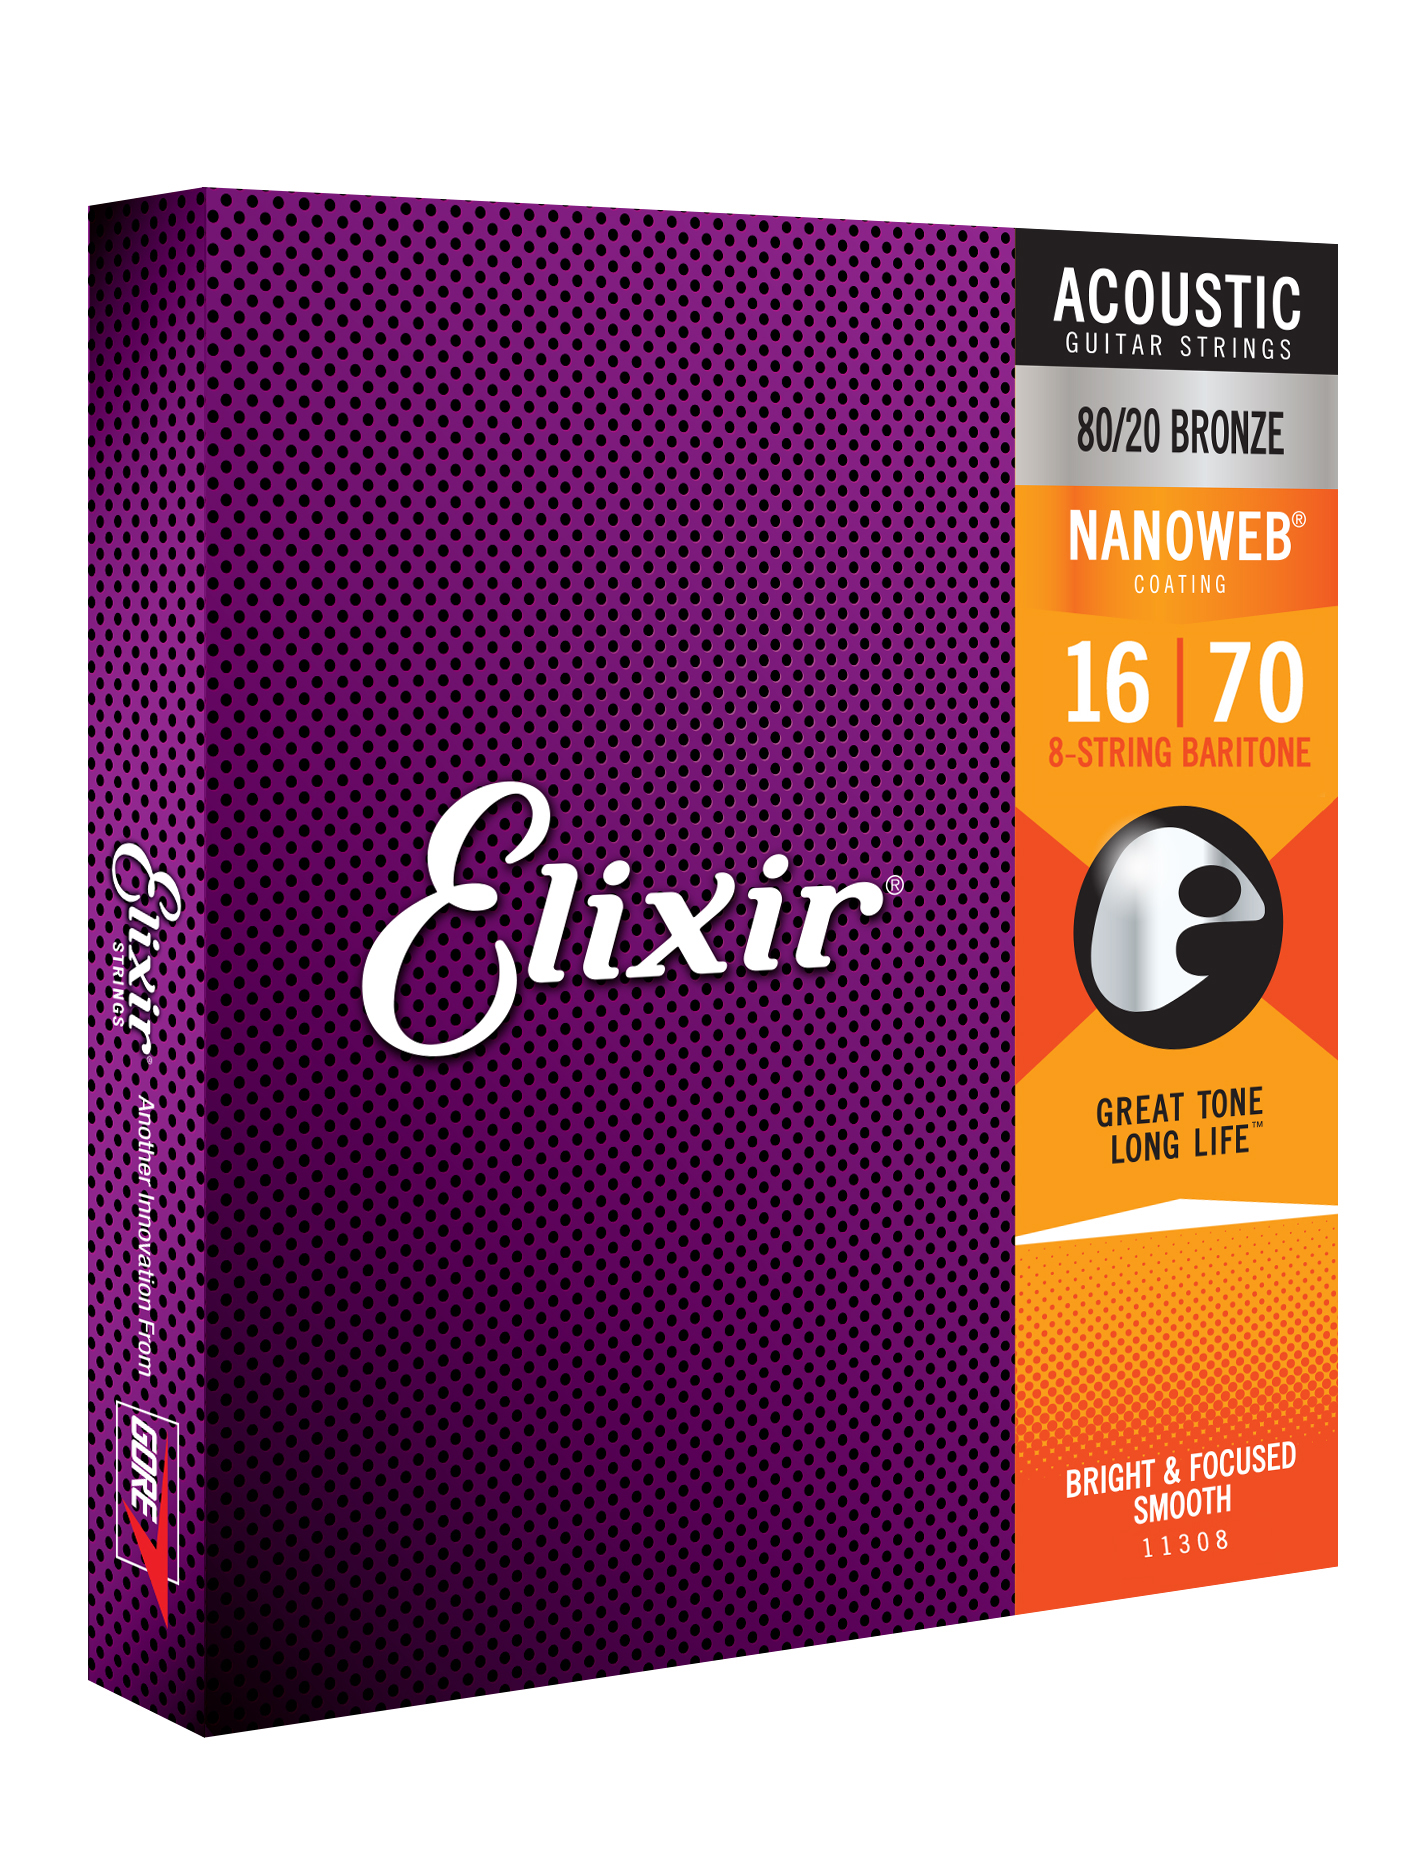 Elixir 11308 8-string Nanoweb 80/20 Bronze Acoustic Guitar 8c Baritone 16-70 - Westerngitaarsnaren - Variation 1